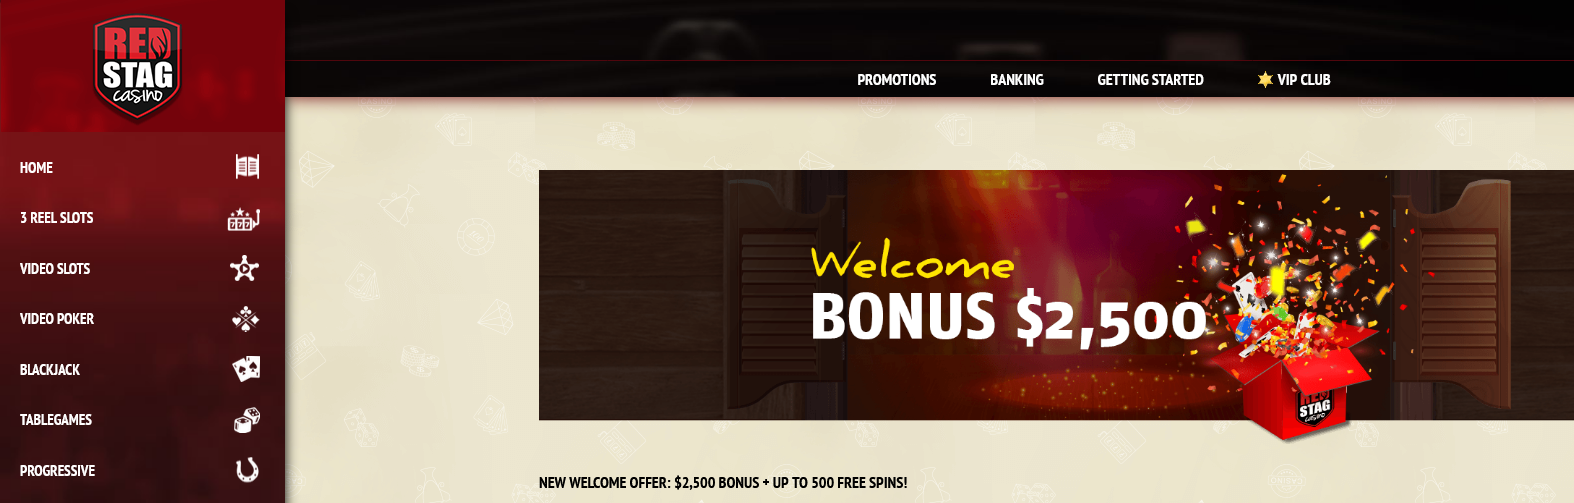 NEW WELCOME OFFER: $2,500 BONUS + UP TO 500 FREE SPINS!  Deposit	Bonus